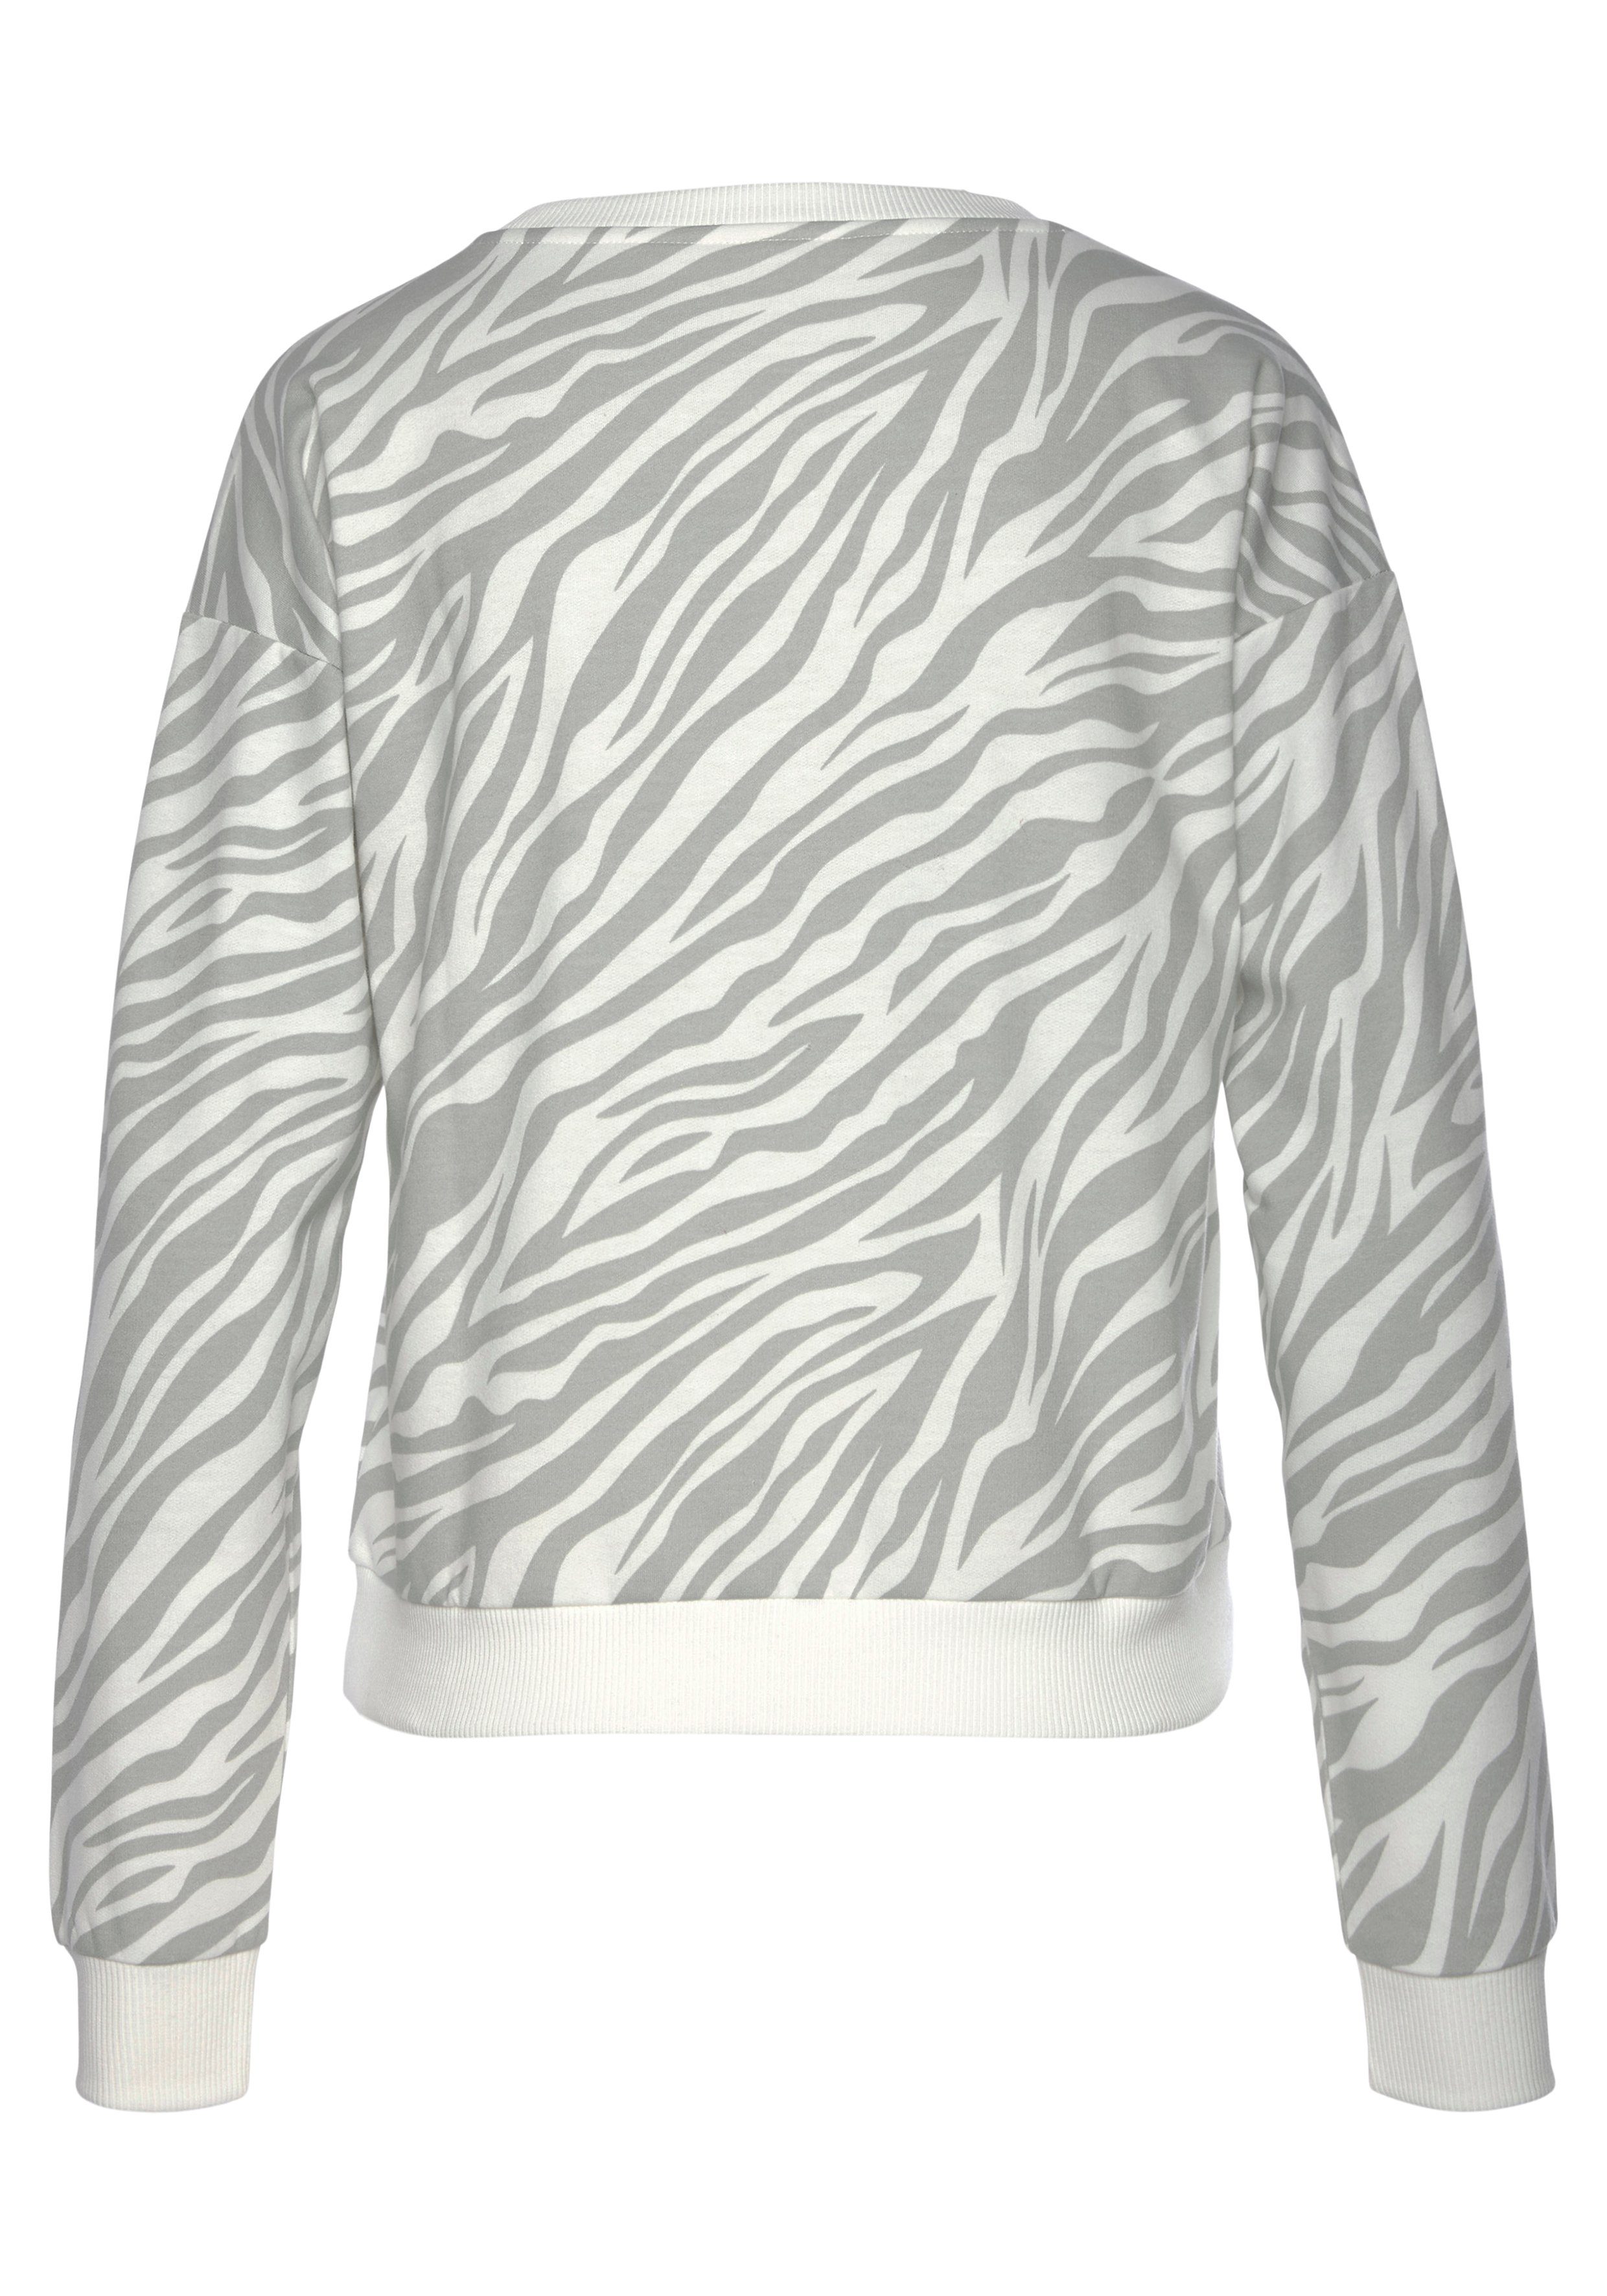 LASCANA zebra Sweater aus Sweatmaterial gestreift weichem grau